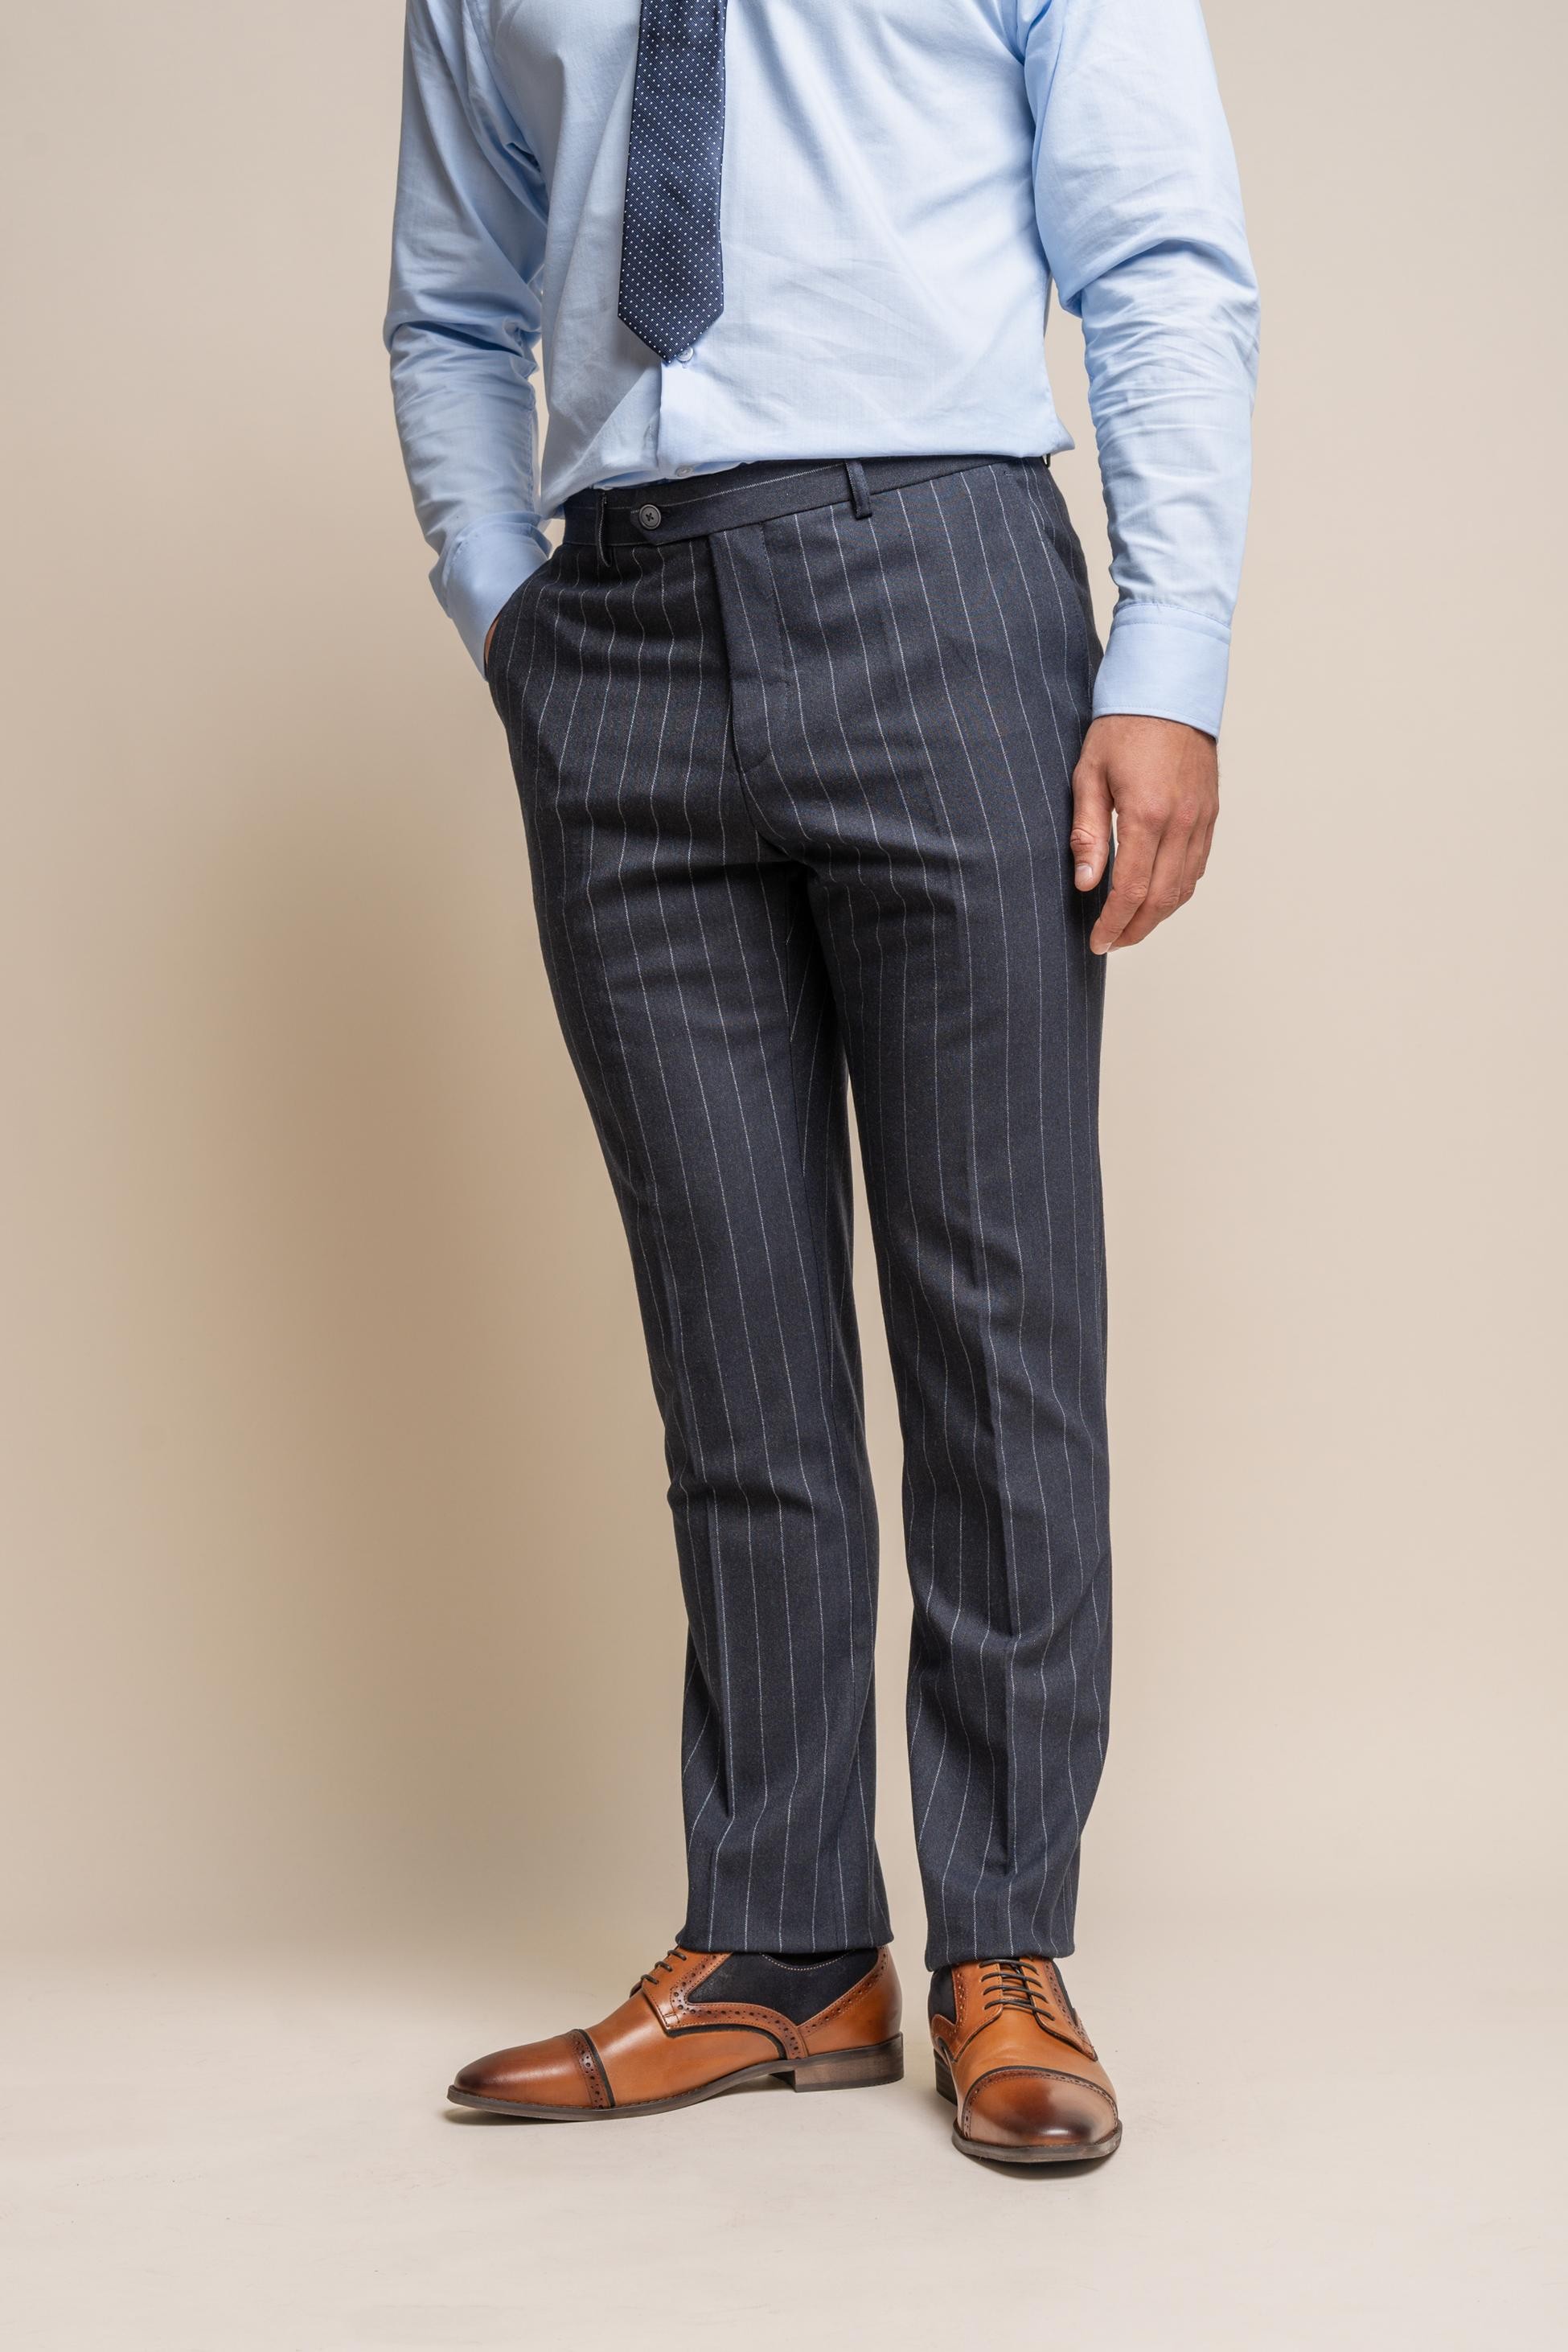 Men's Pinstripe Slim Fit Navy Blue Formal Pants- Invincible